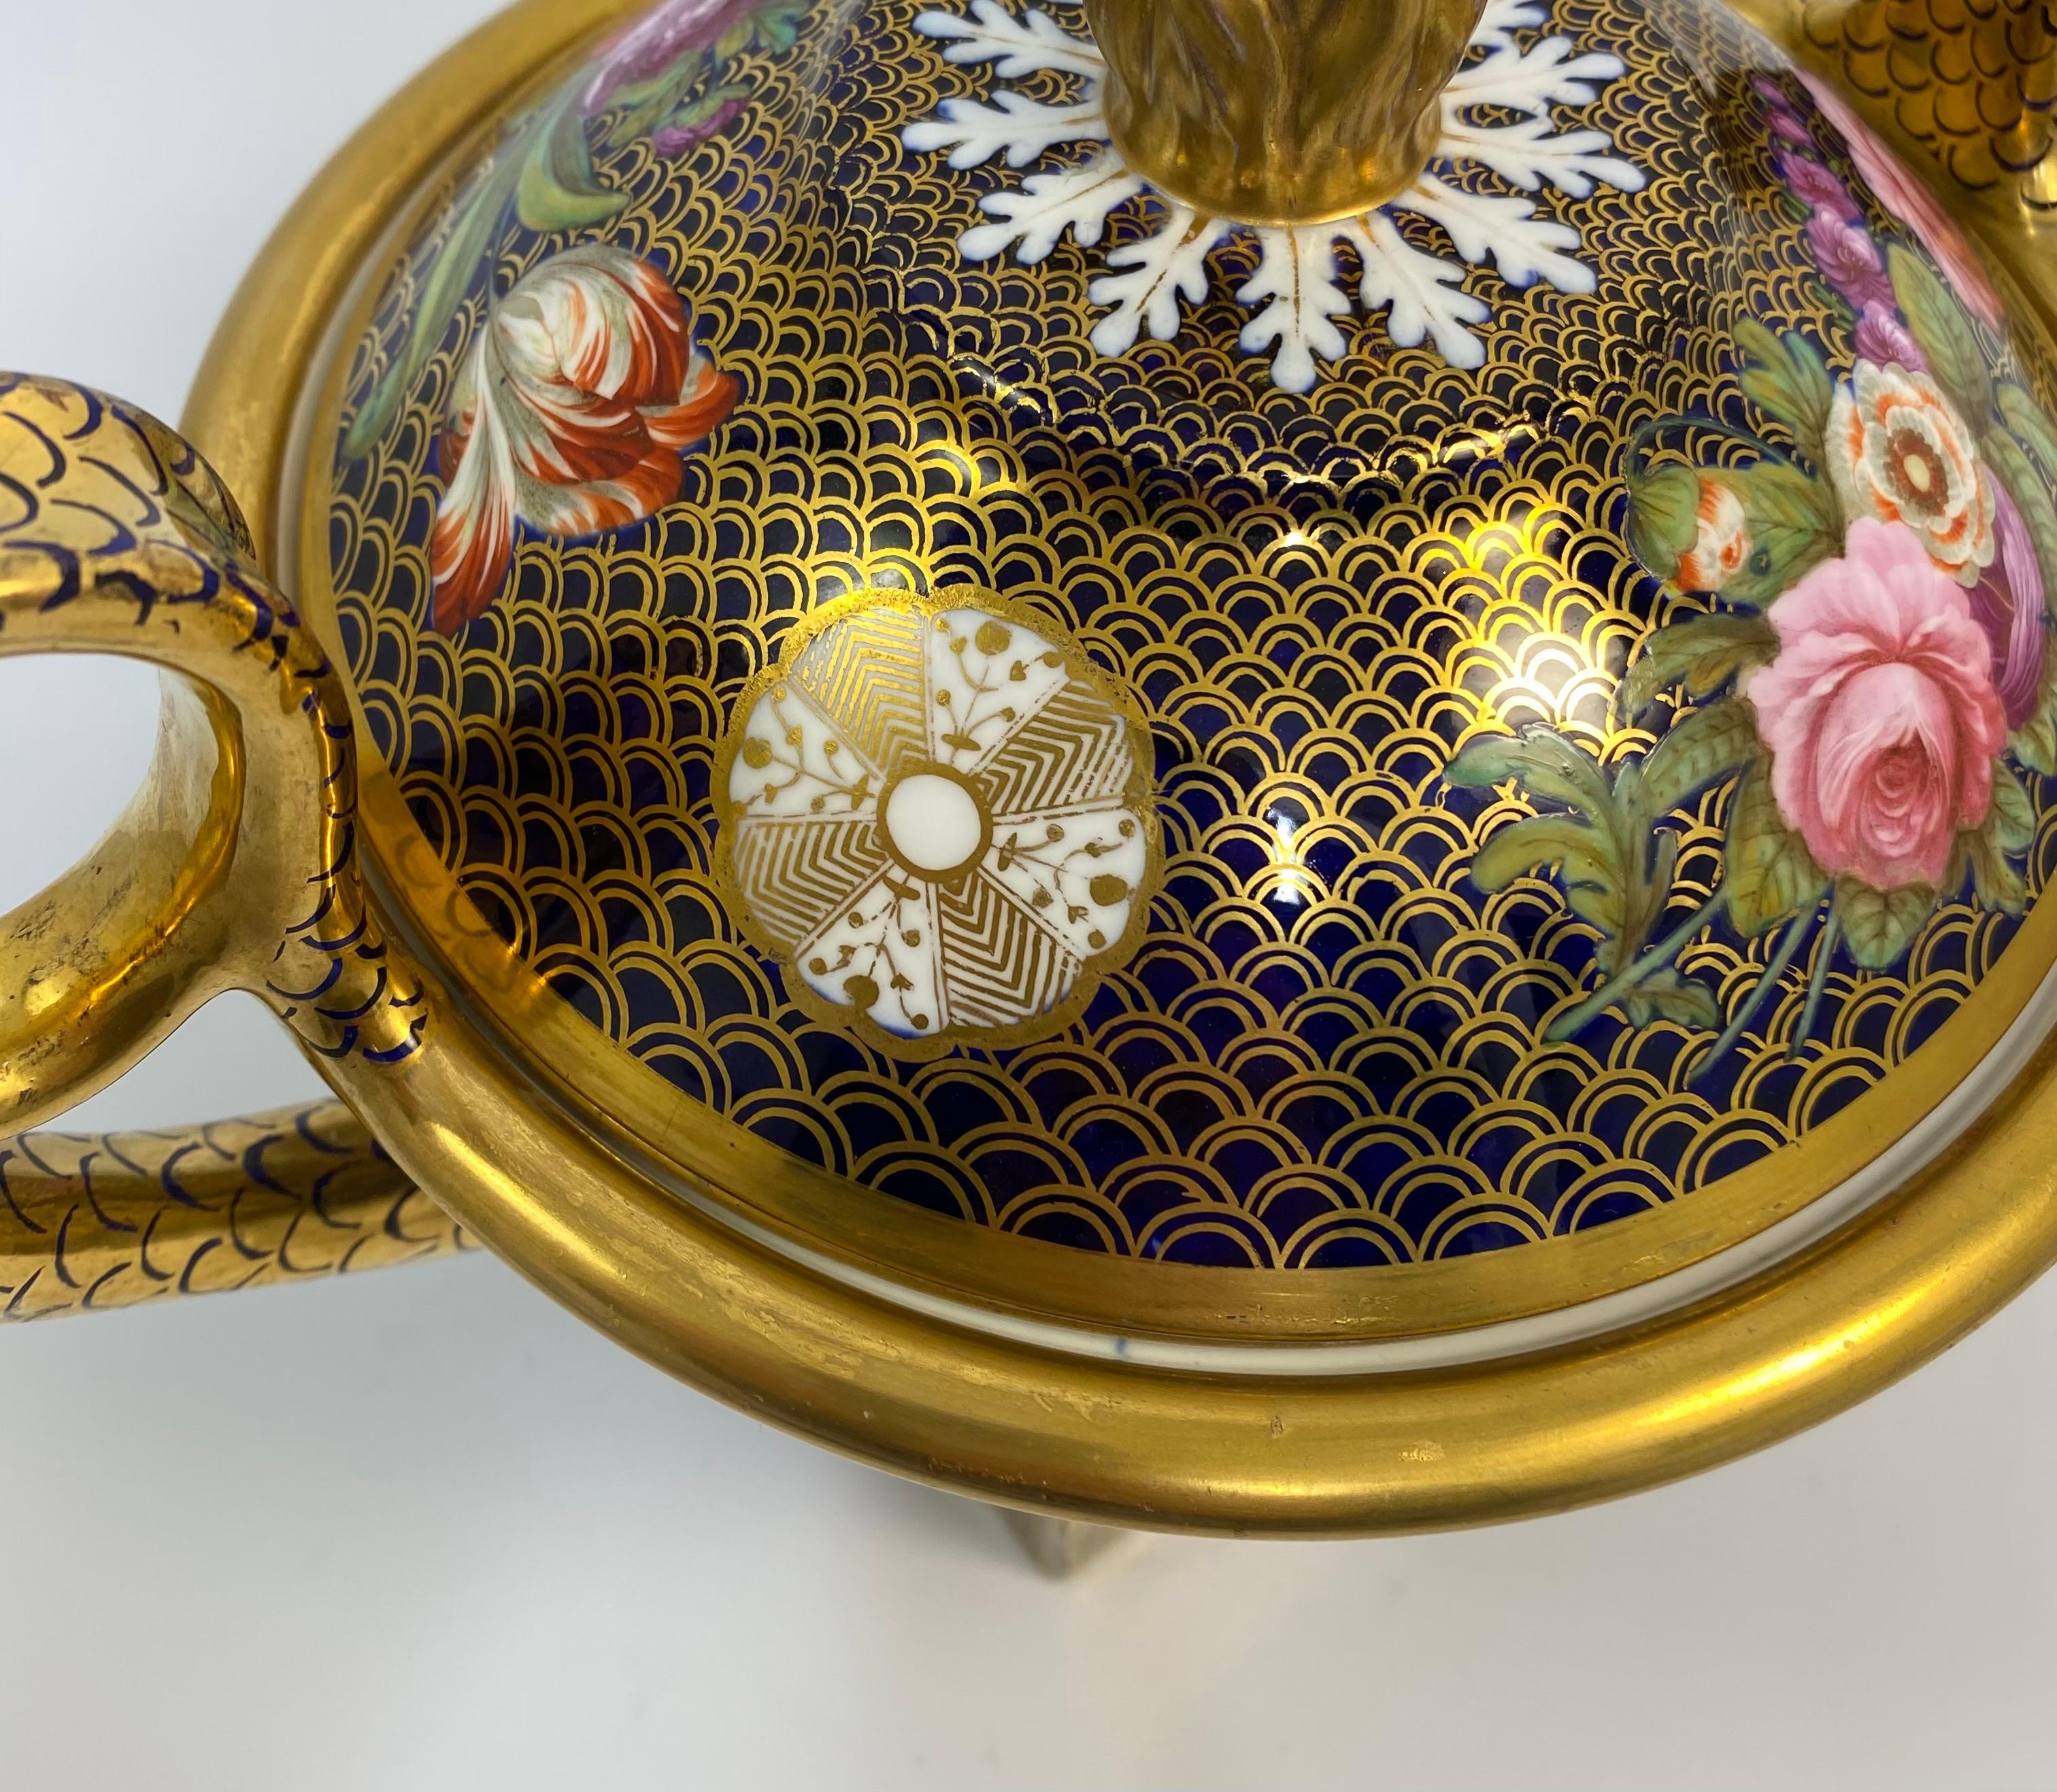 Spode porcelain pot pourri and cover, ‘1166’ pattern, c. 1820. 2